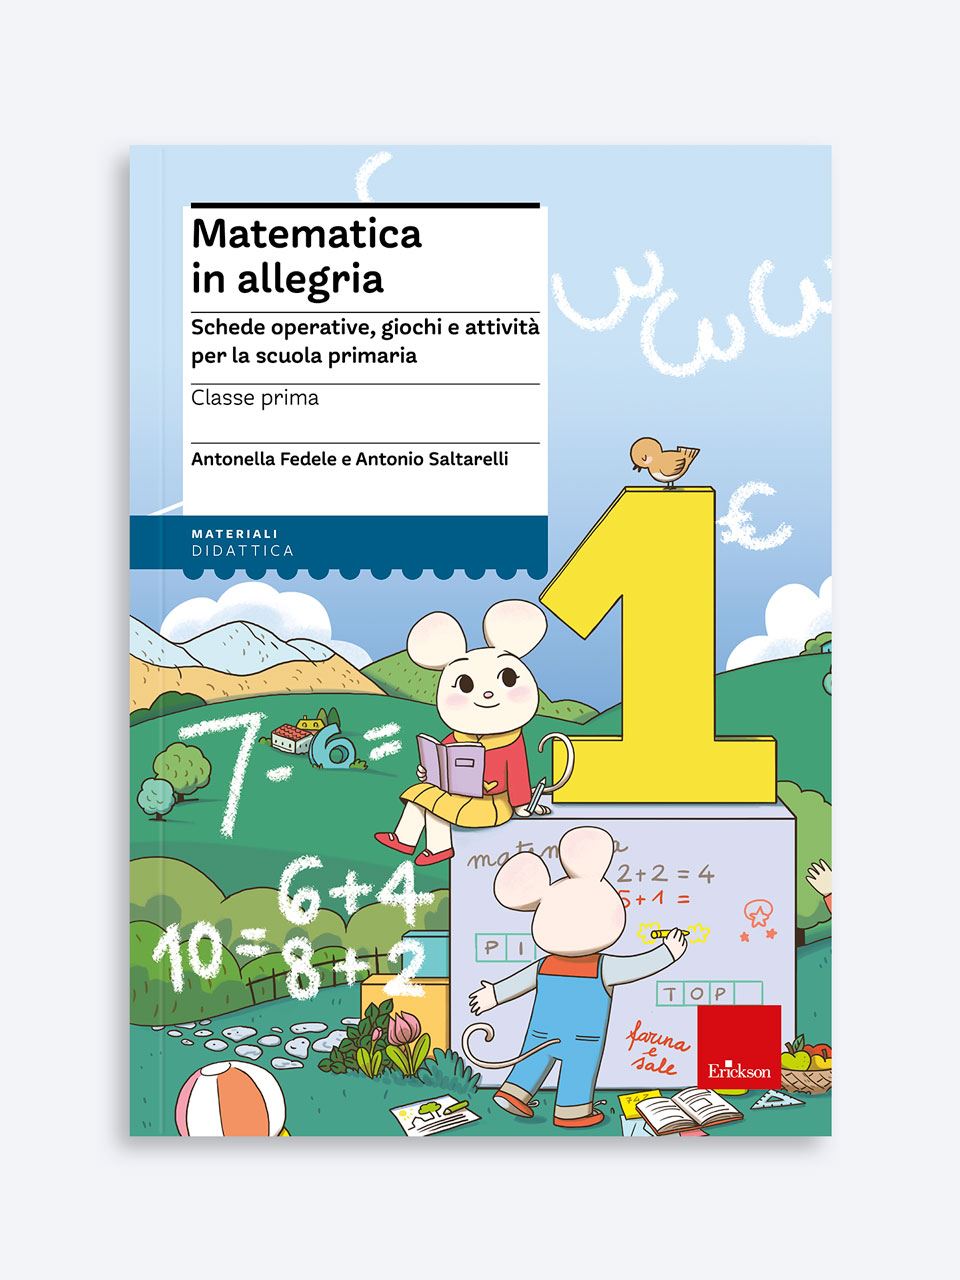 Matematica in allegria - Classe prima - App e software - Libri - Erickson 5